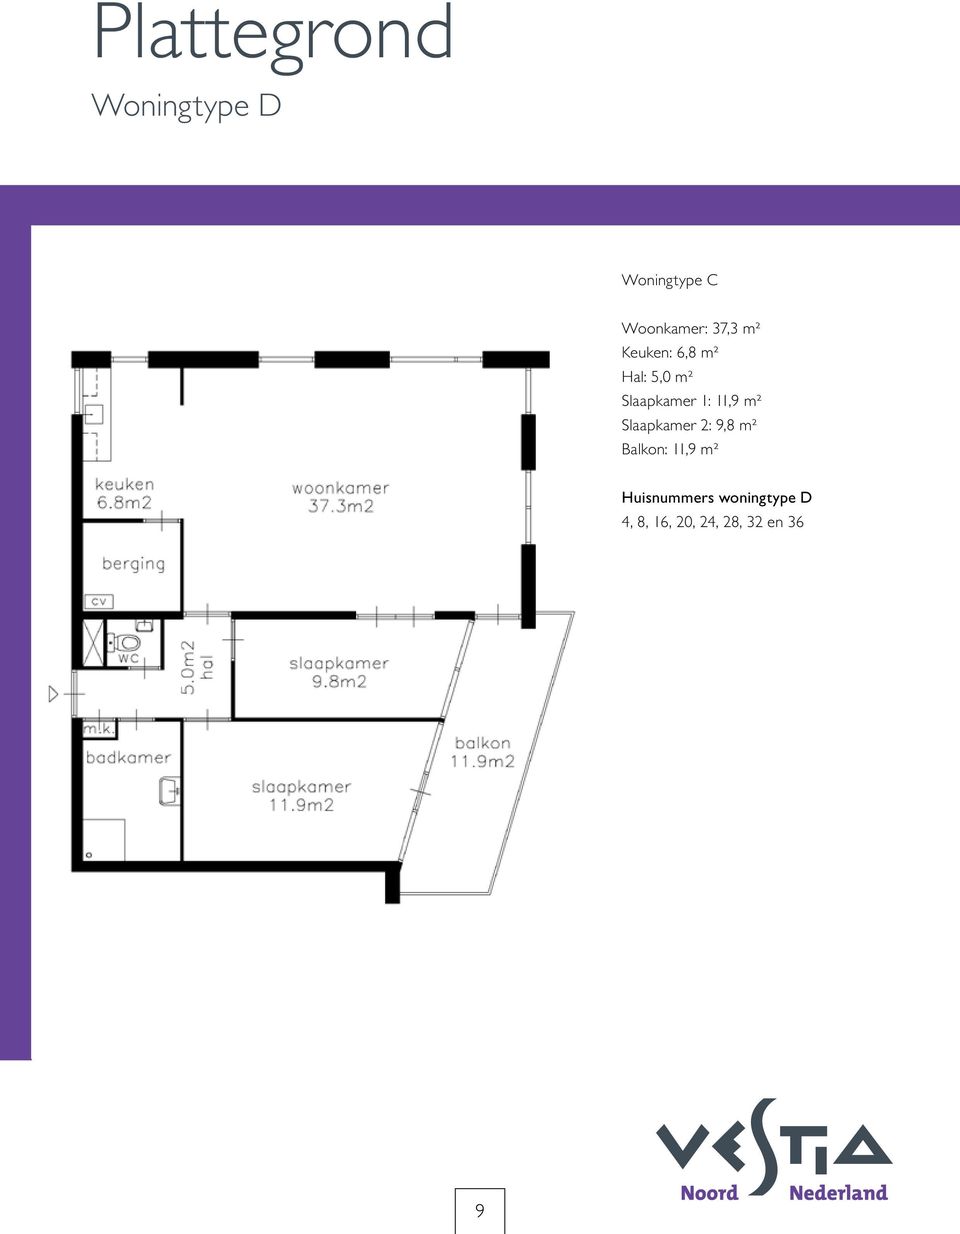 11,9 m² Slaapkamer 2: 9,8 m² Balkon: 11,9 m²